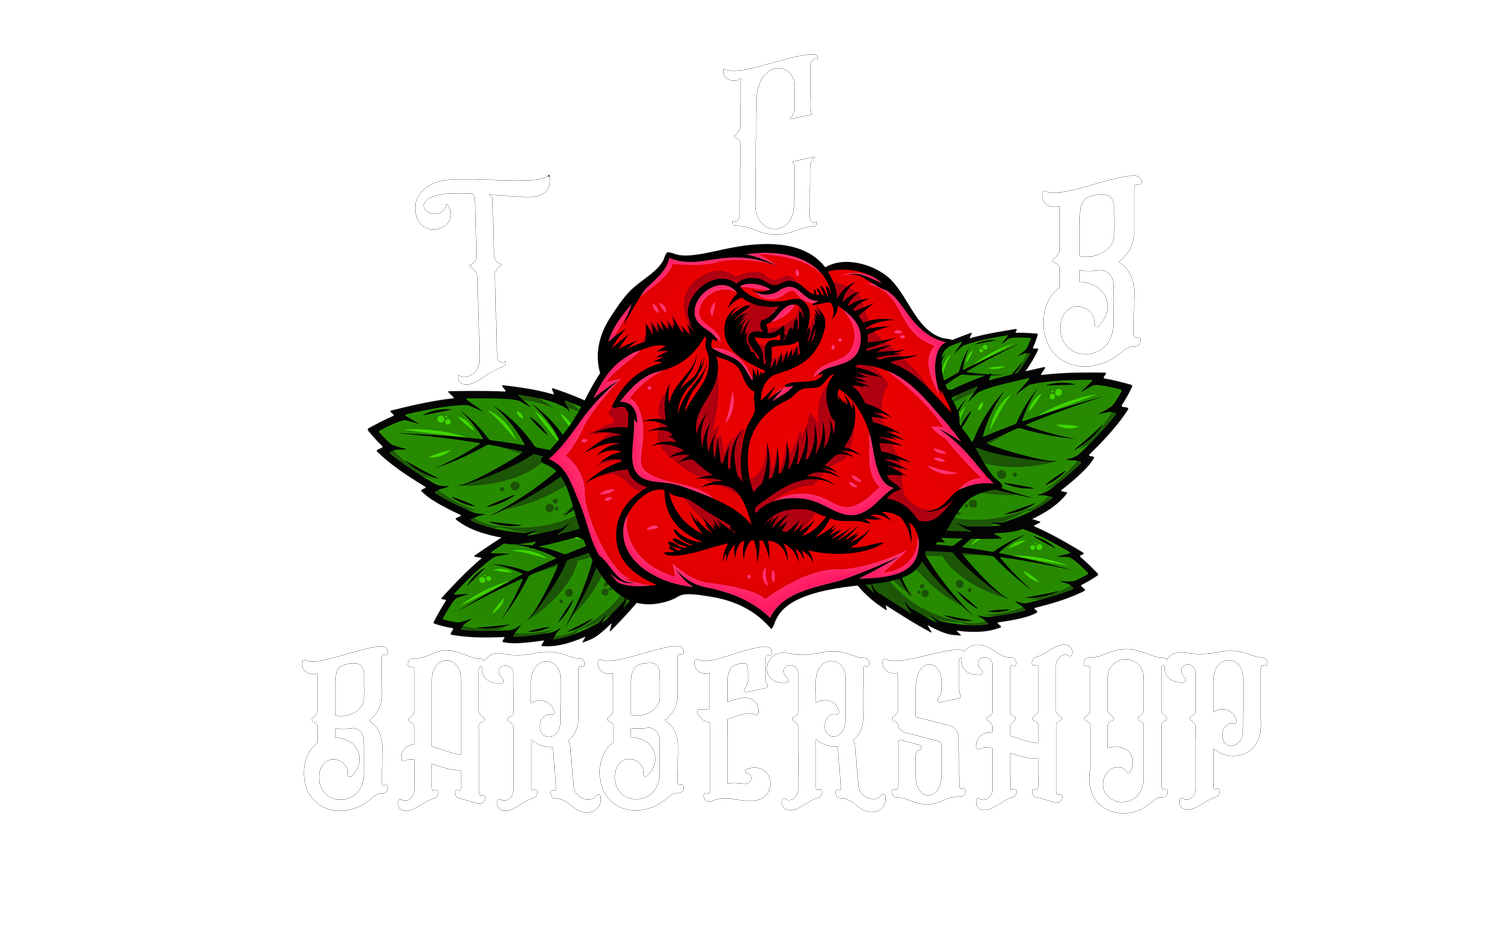 T.C.B Barbershop